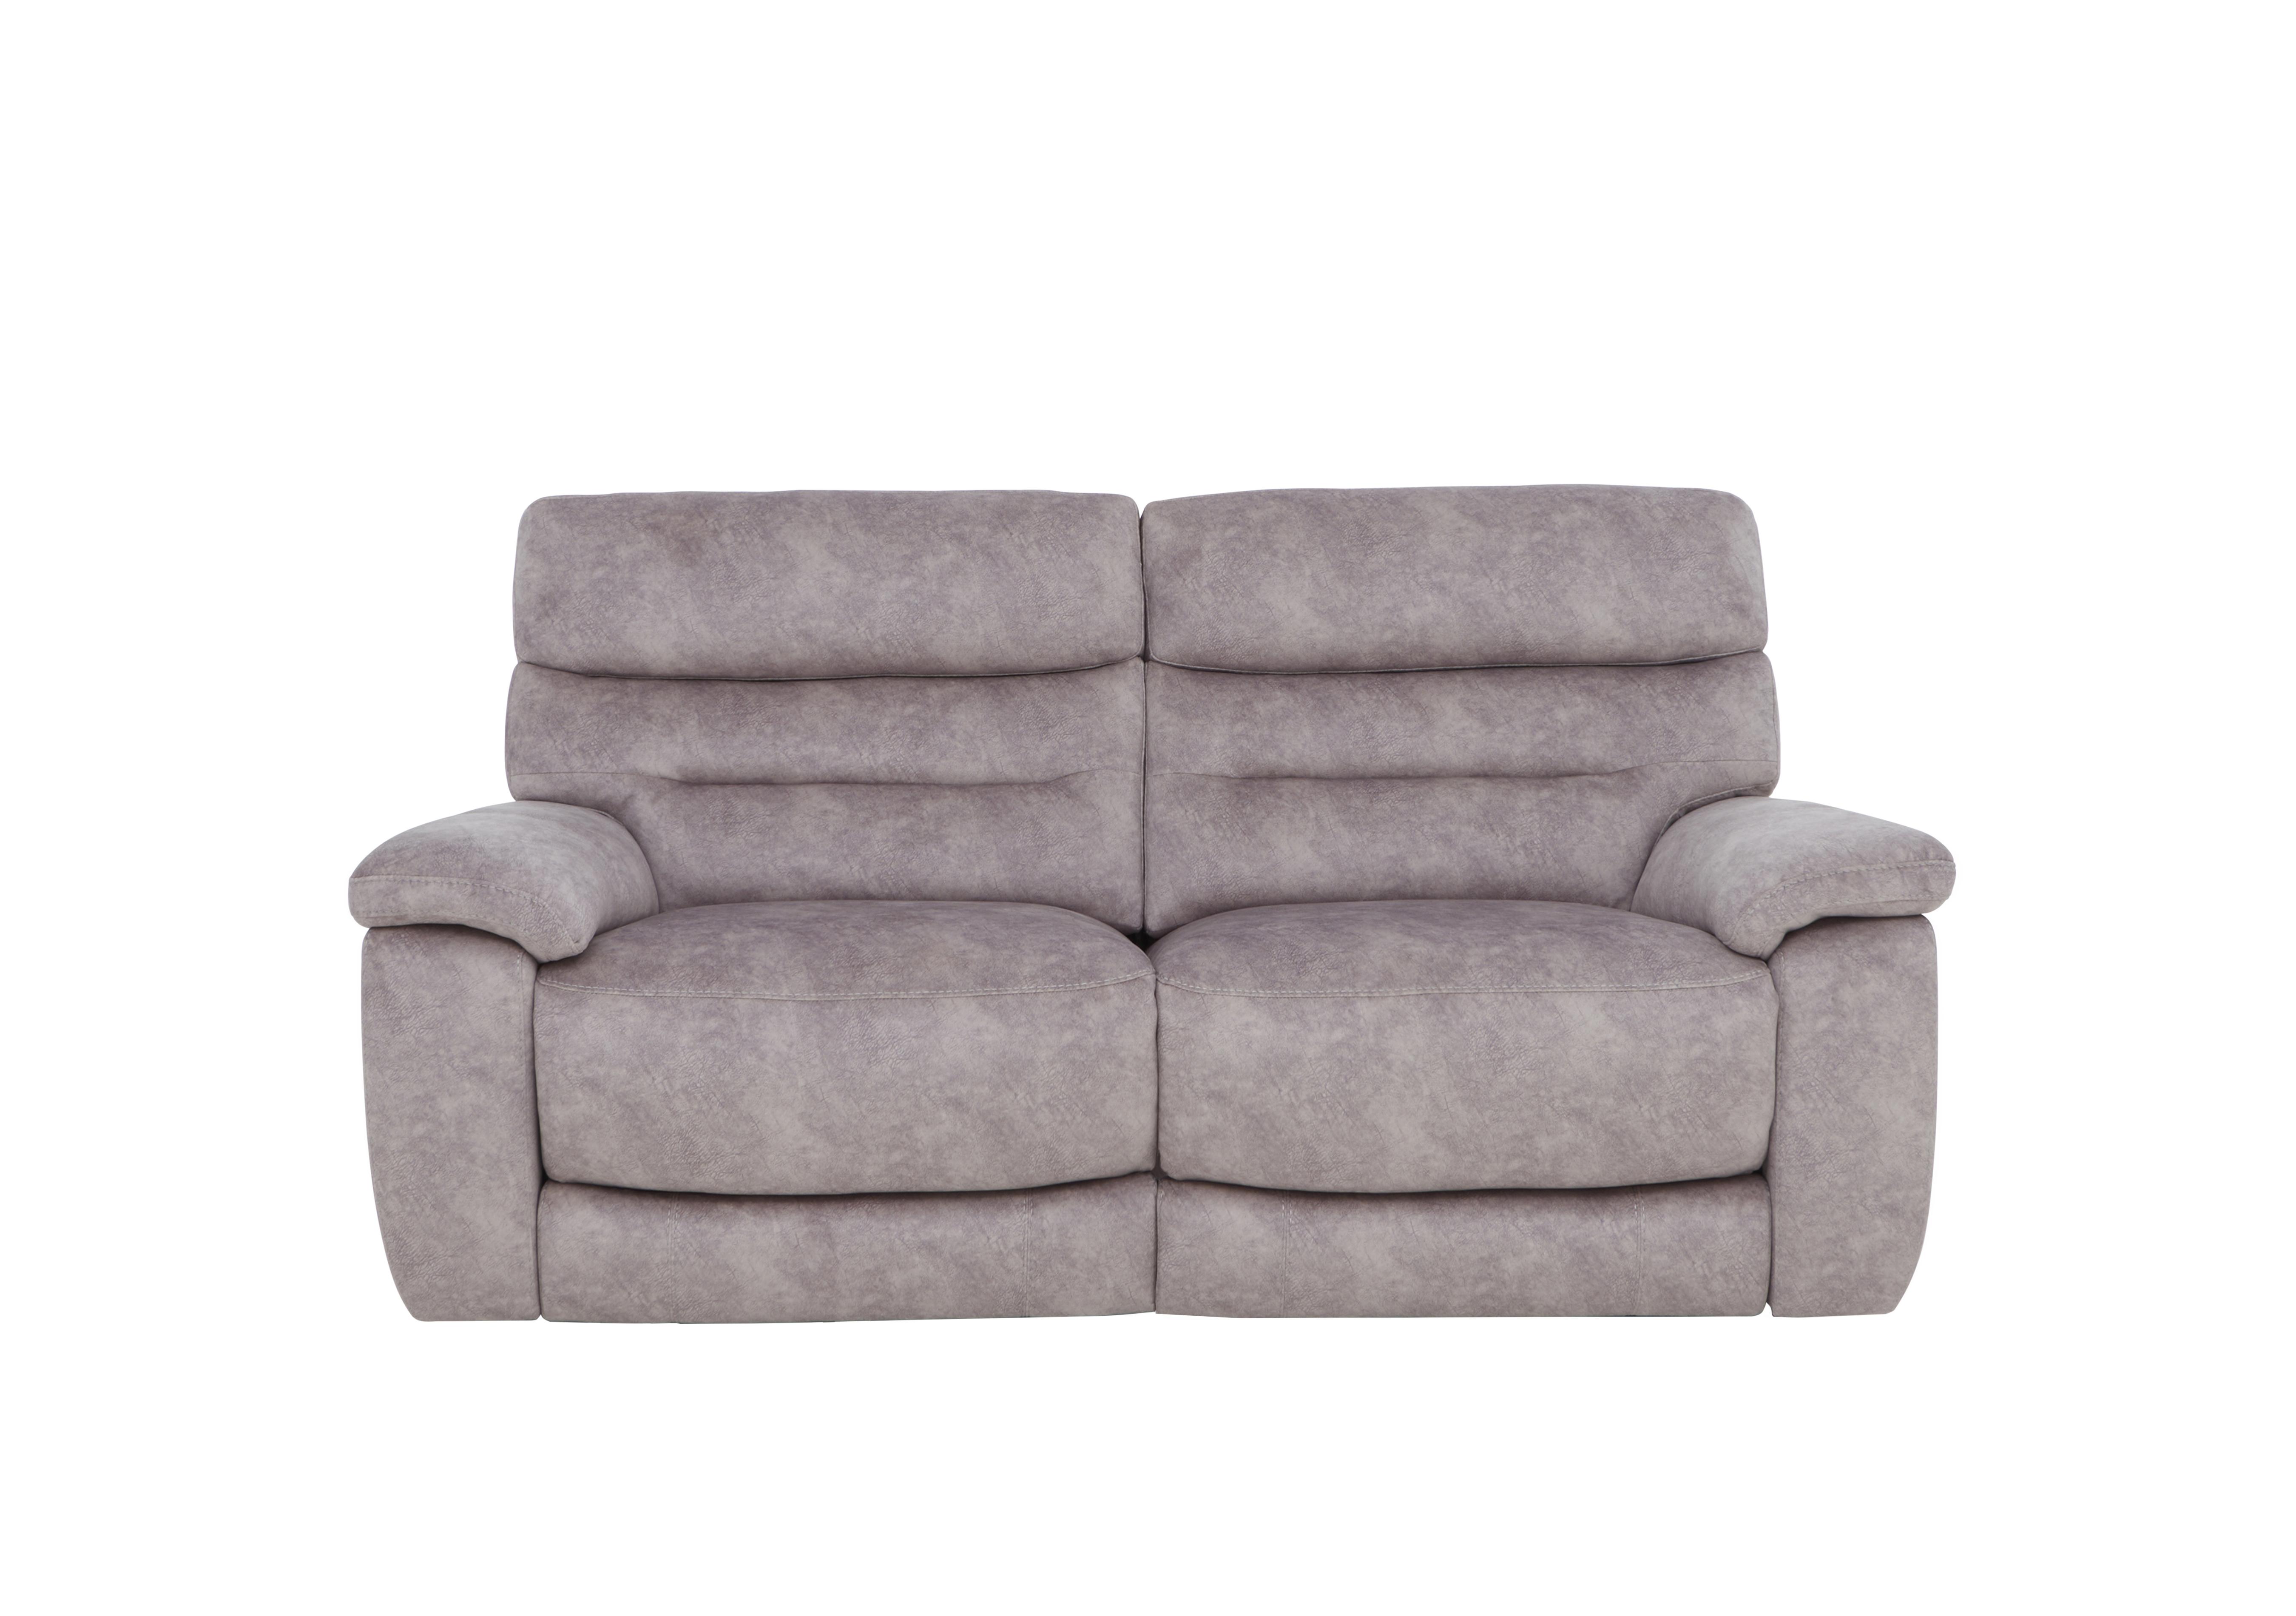 Nimbus 2 Seater Fabric Power Recliner Sofa with Power Headrests in Bfa-Bnn-R28 Grey on Furniture Village